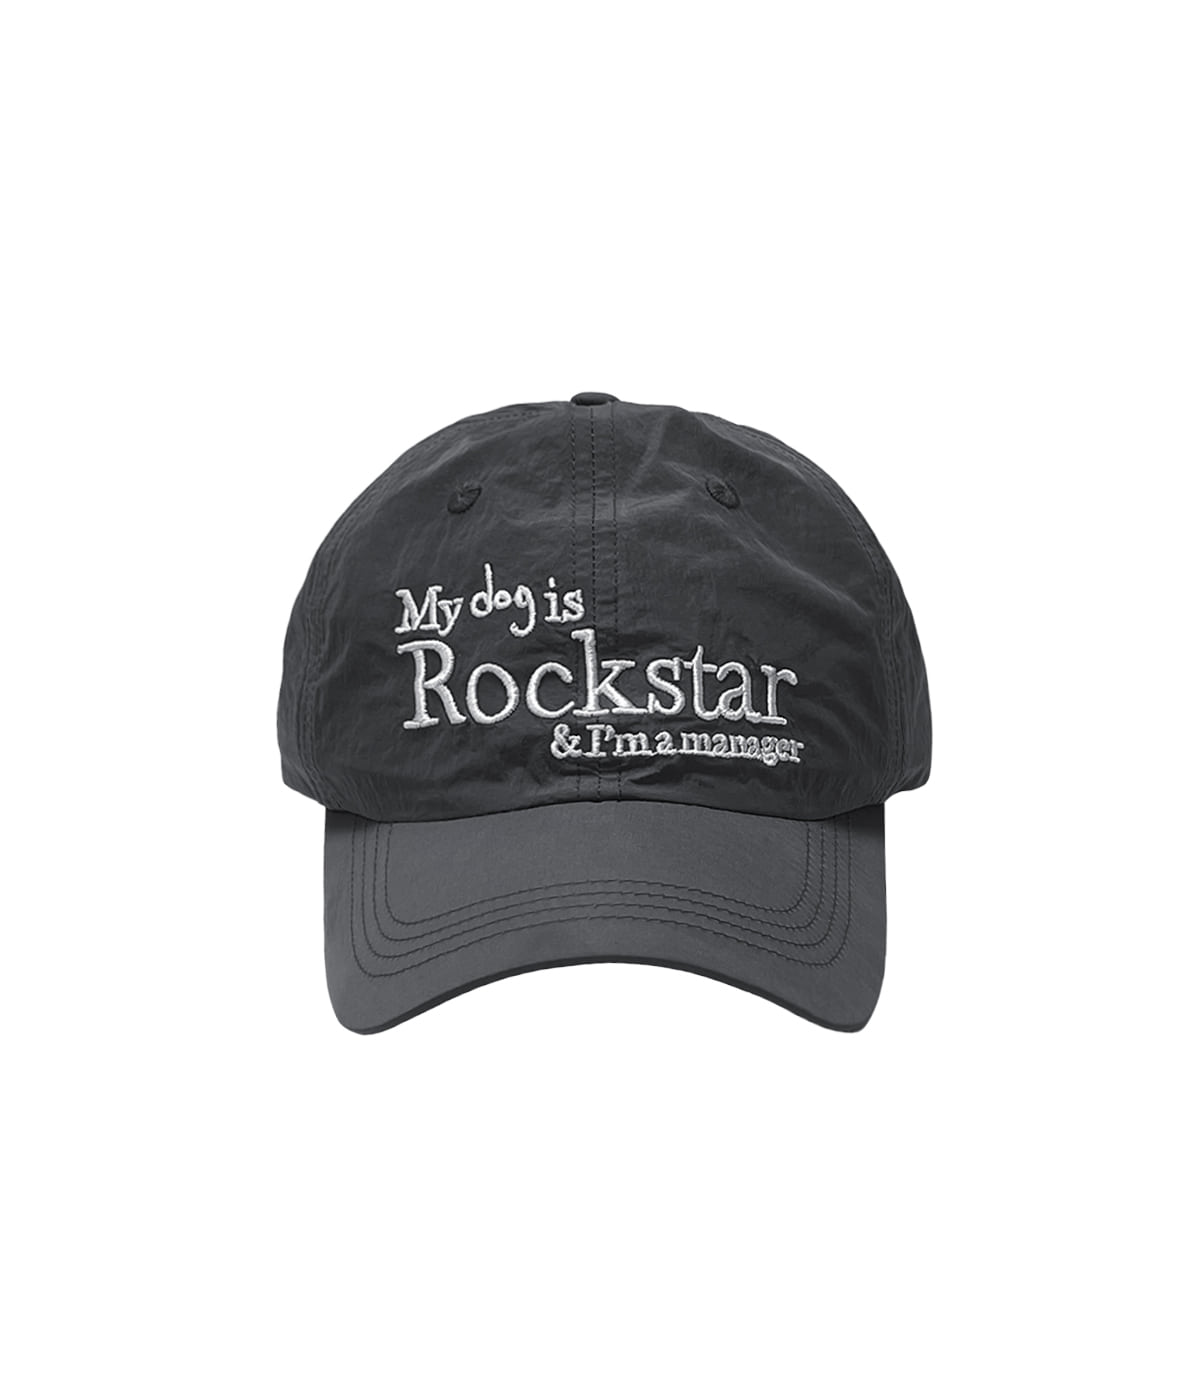 Rockstar dog cap (Charcoal)- 2월 초 발송예정